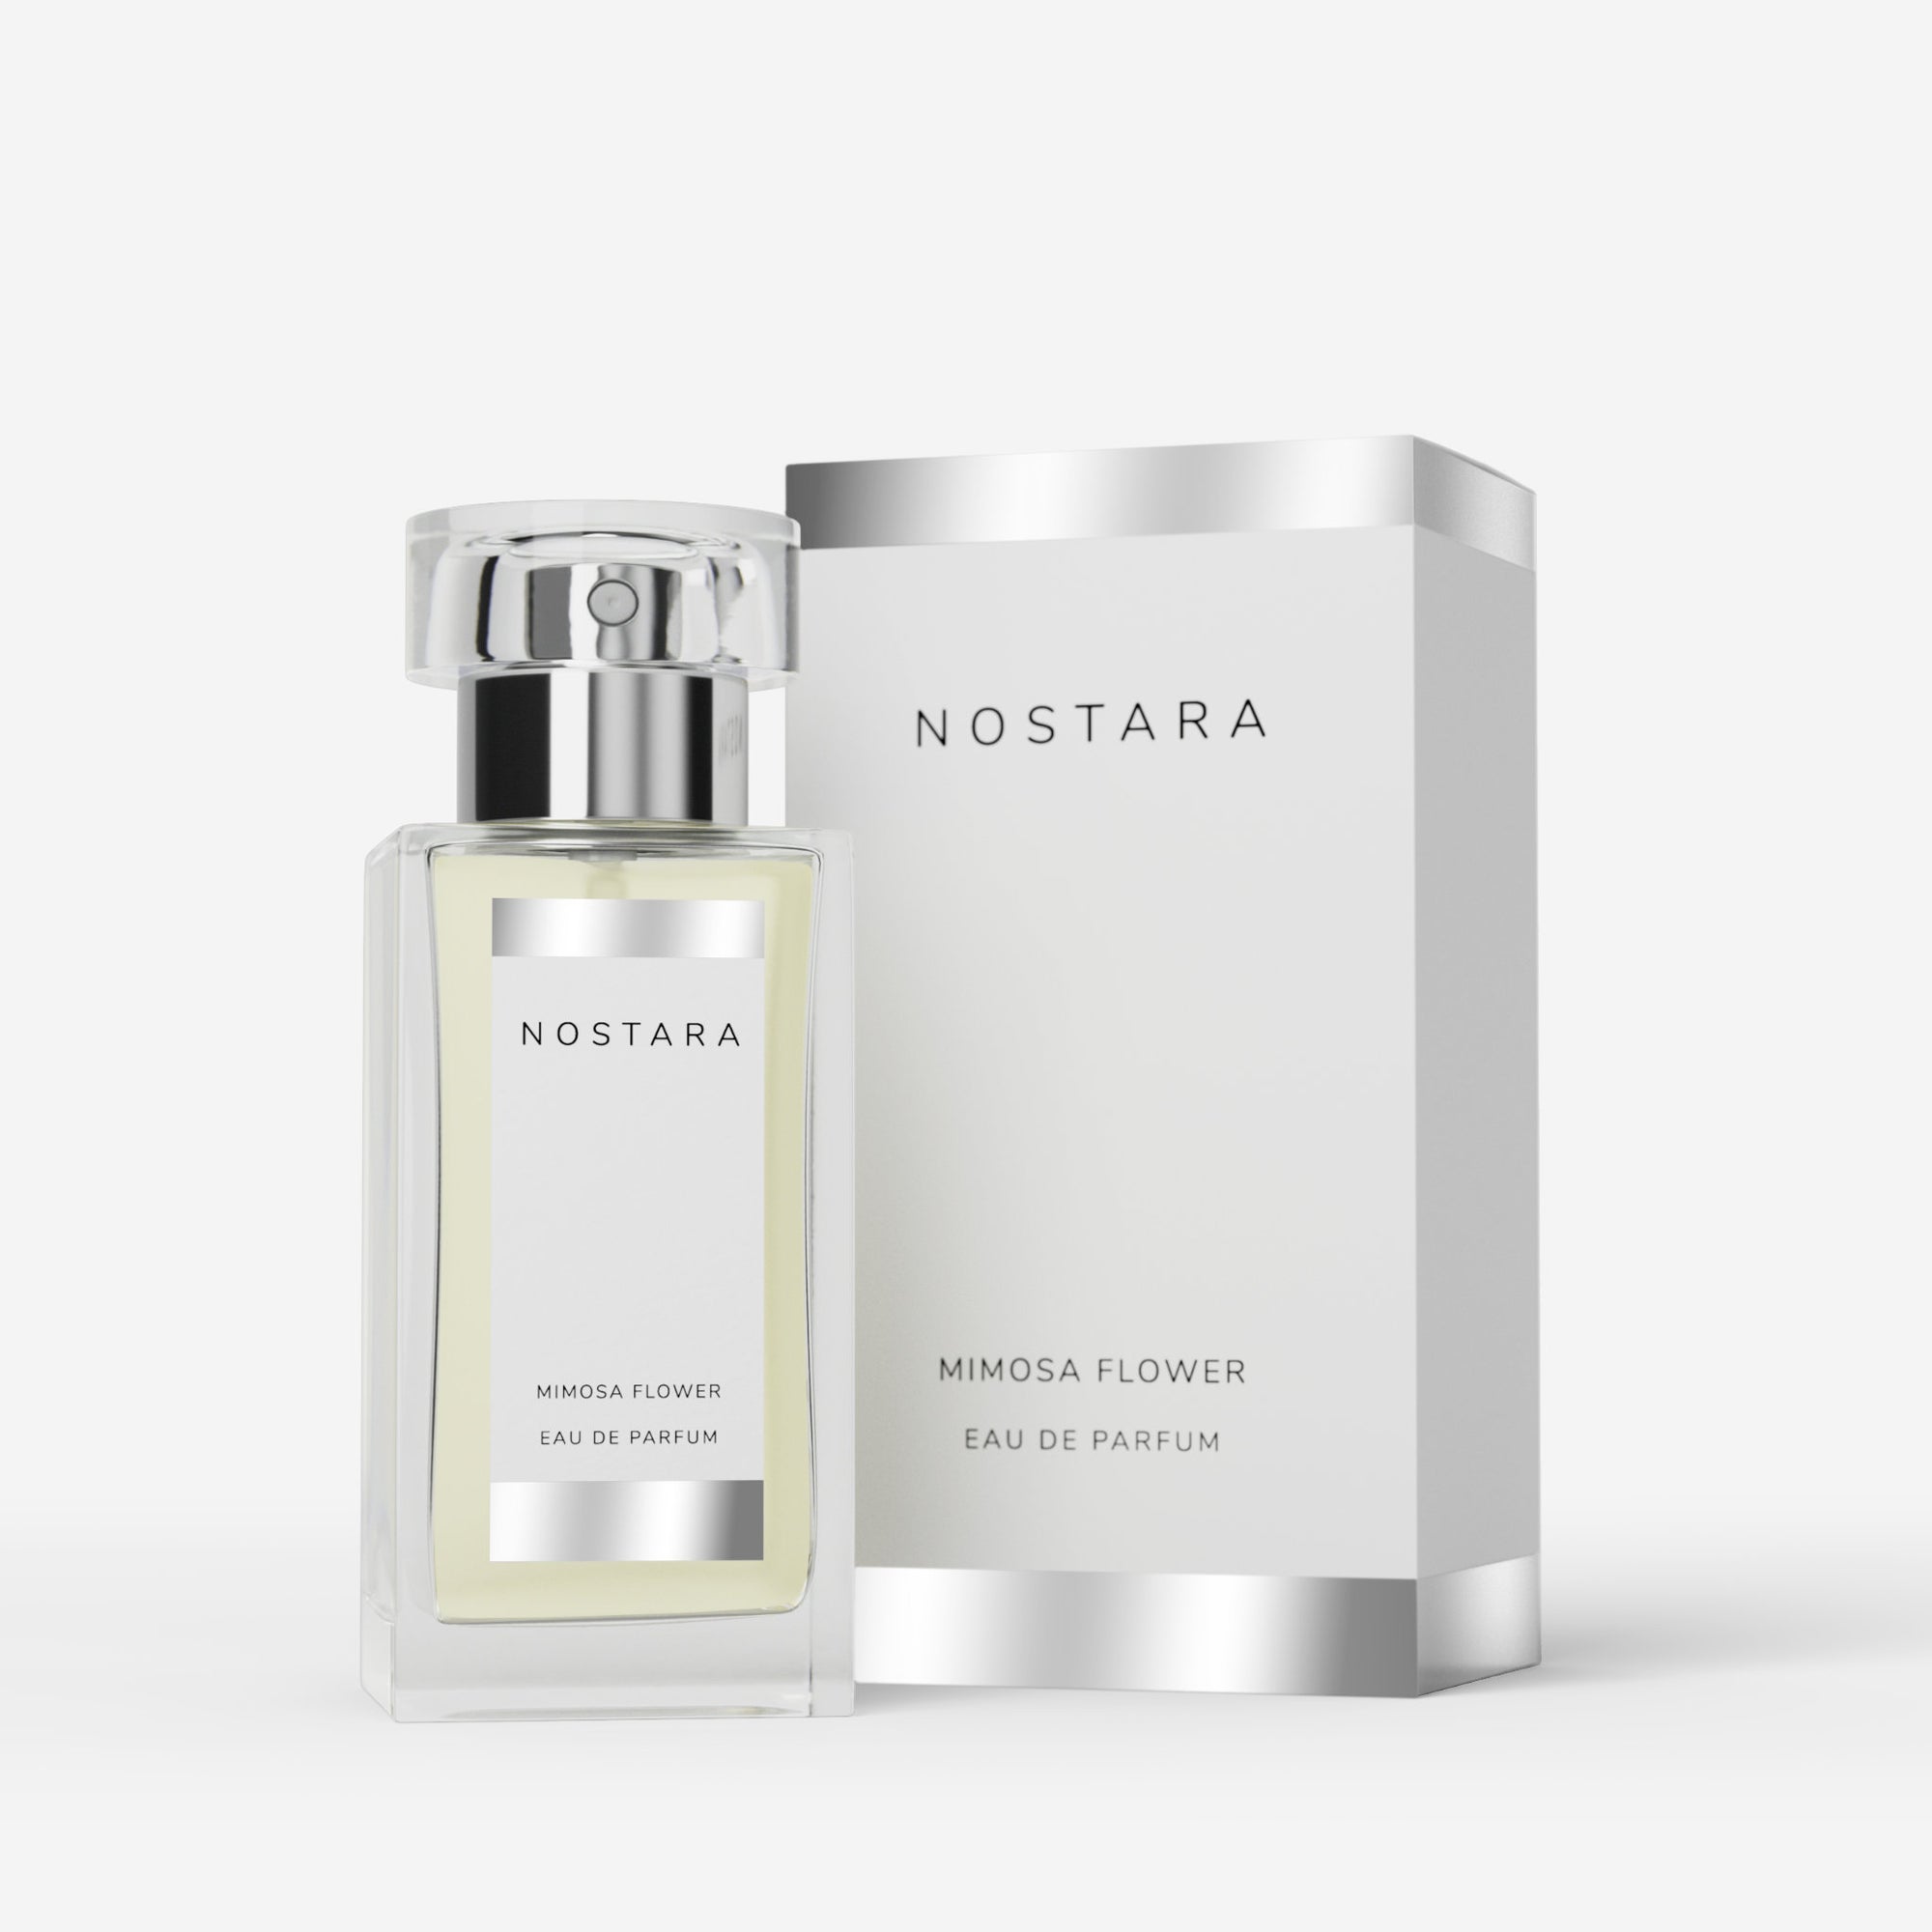 Nostara Mimosa Flower EDP fine fragrance perfume eau de parfum